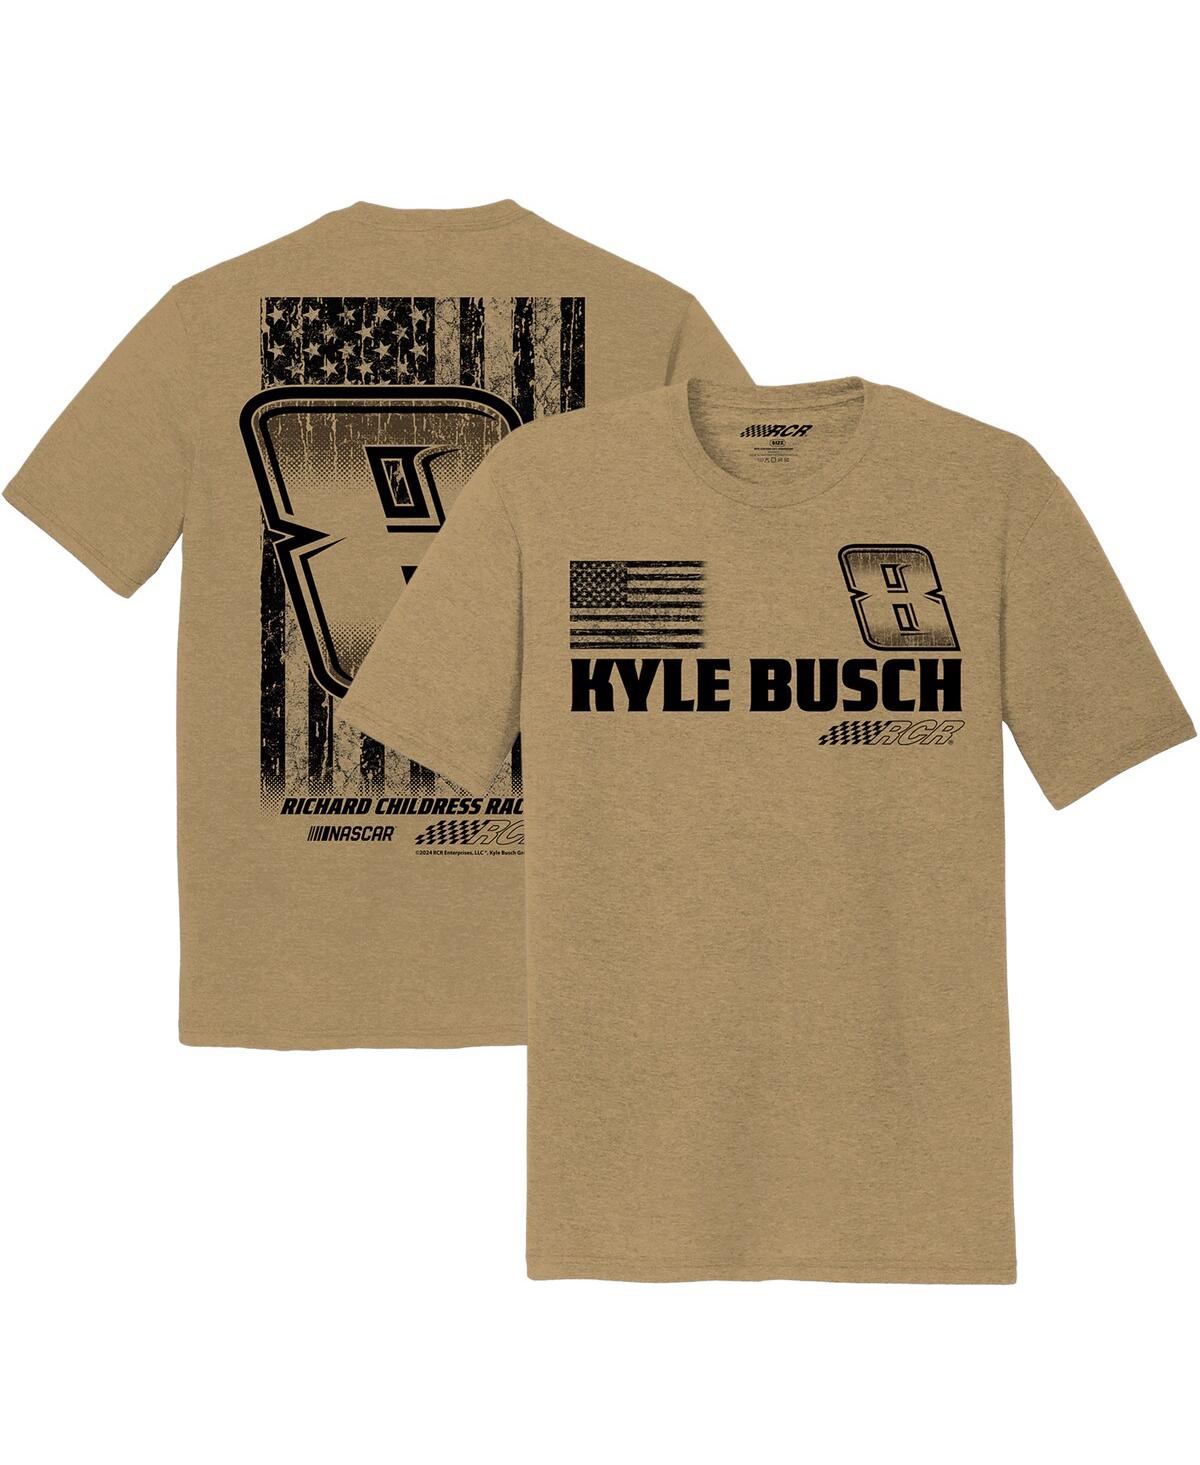 Men's Richard Childress Racing Team Collection Tan Kyle Busch Tri-Blend Flag T-shirt - Tan